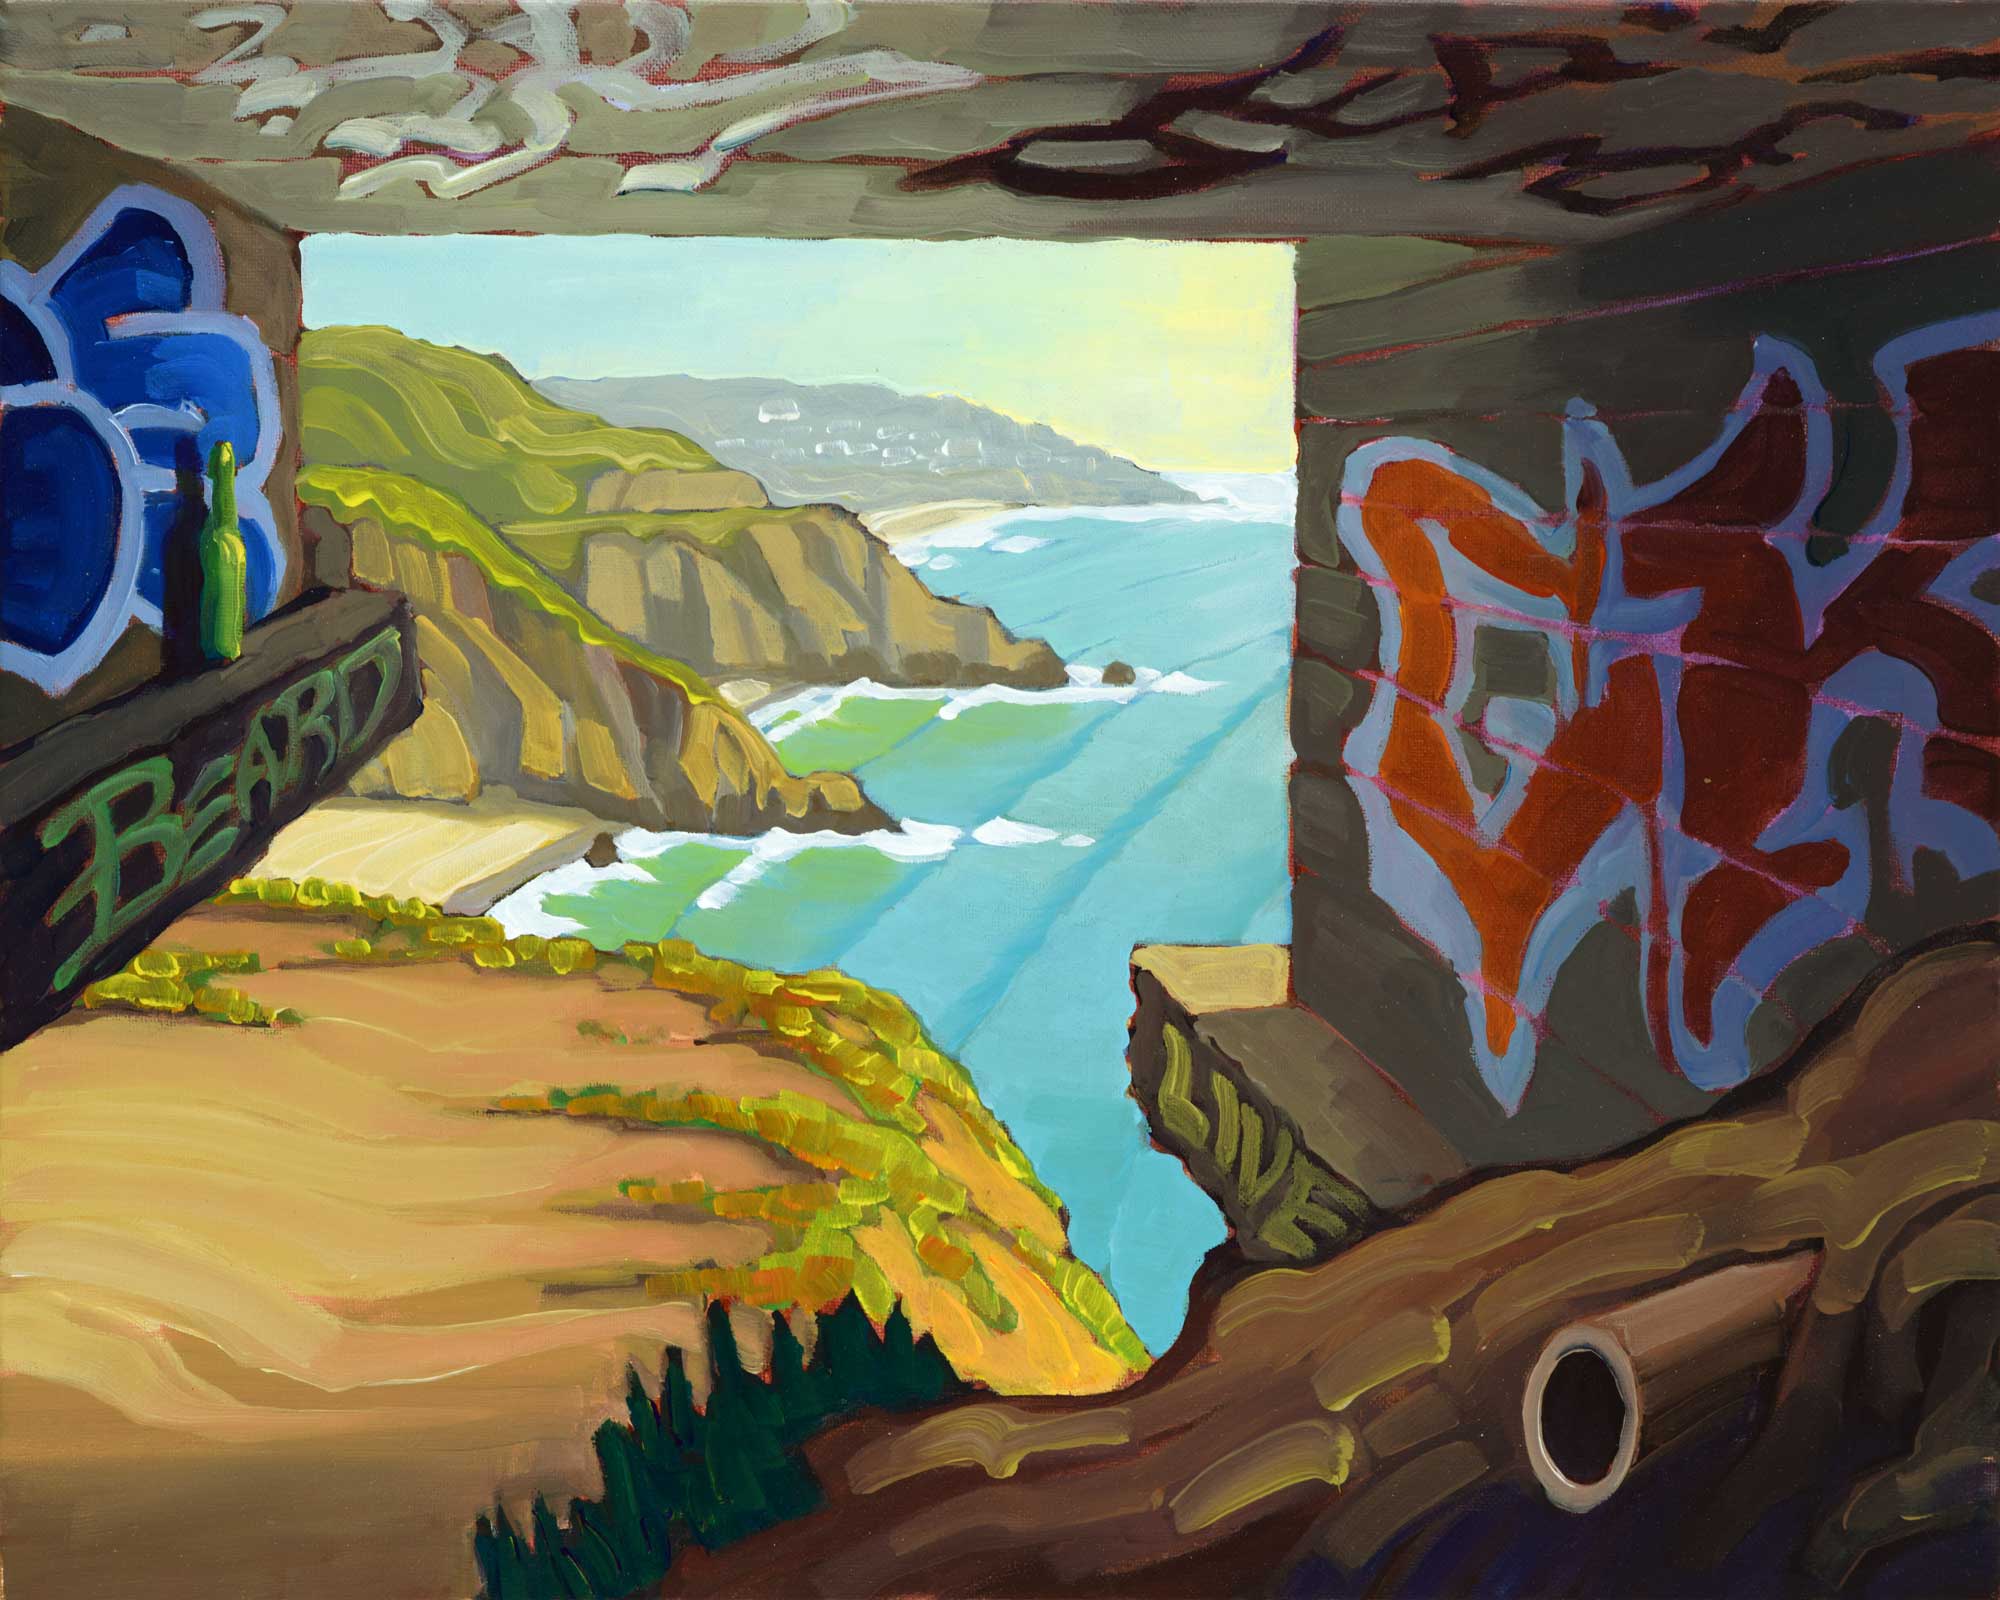 Plein air artwork from the Devil's slide bunker over Montara State Beach on the San Mateo coast of California